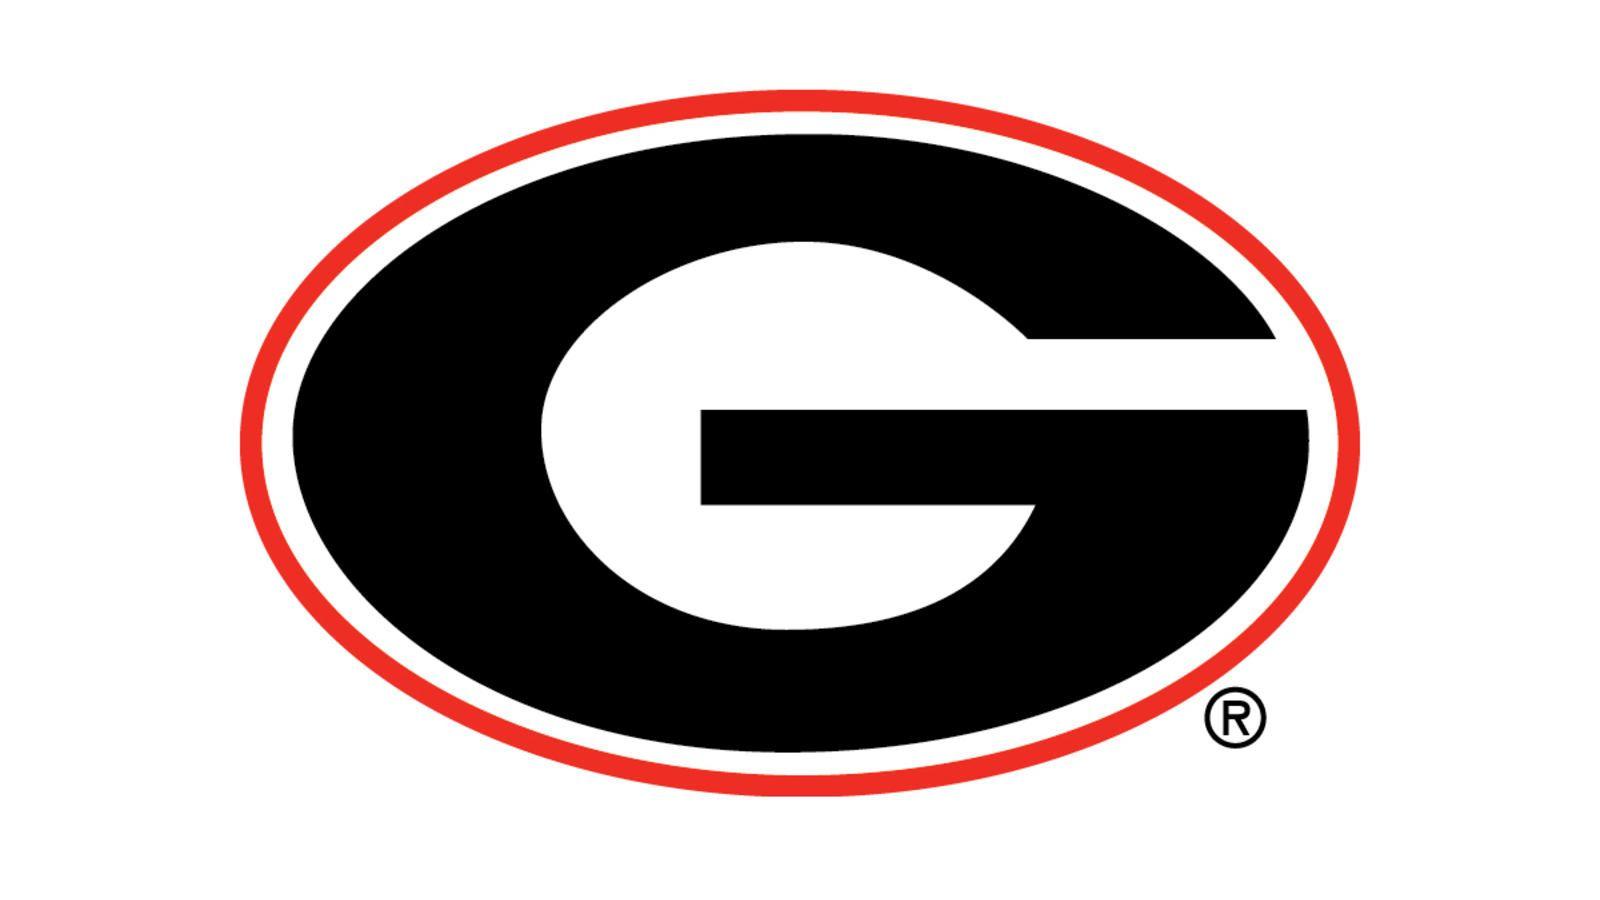 Georgia Logo - Georgia Athletics Introduces New Brand Identity System